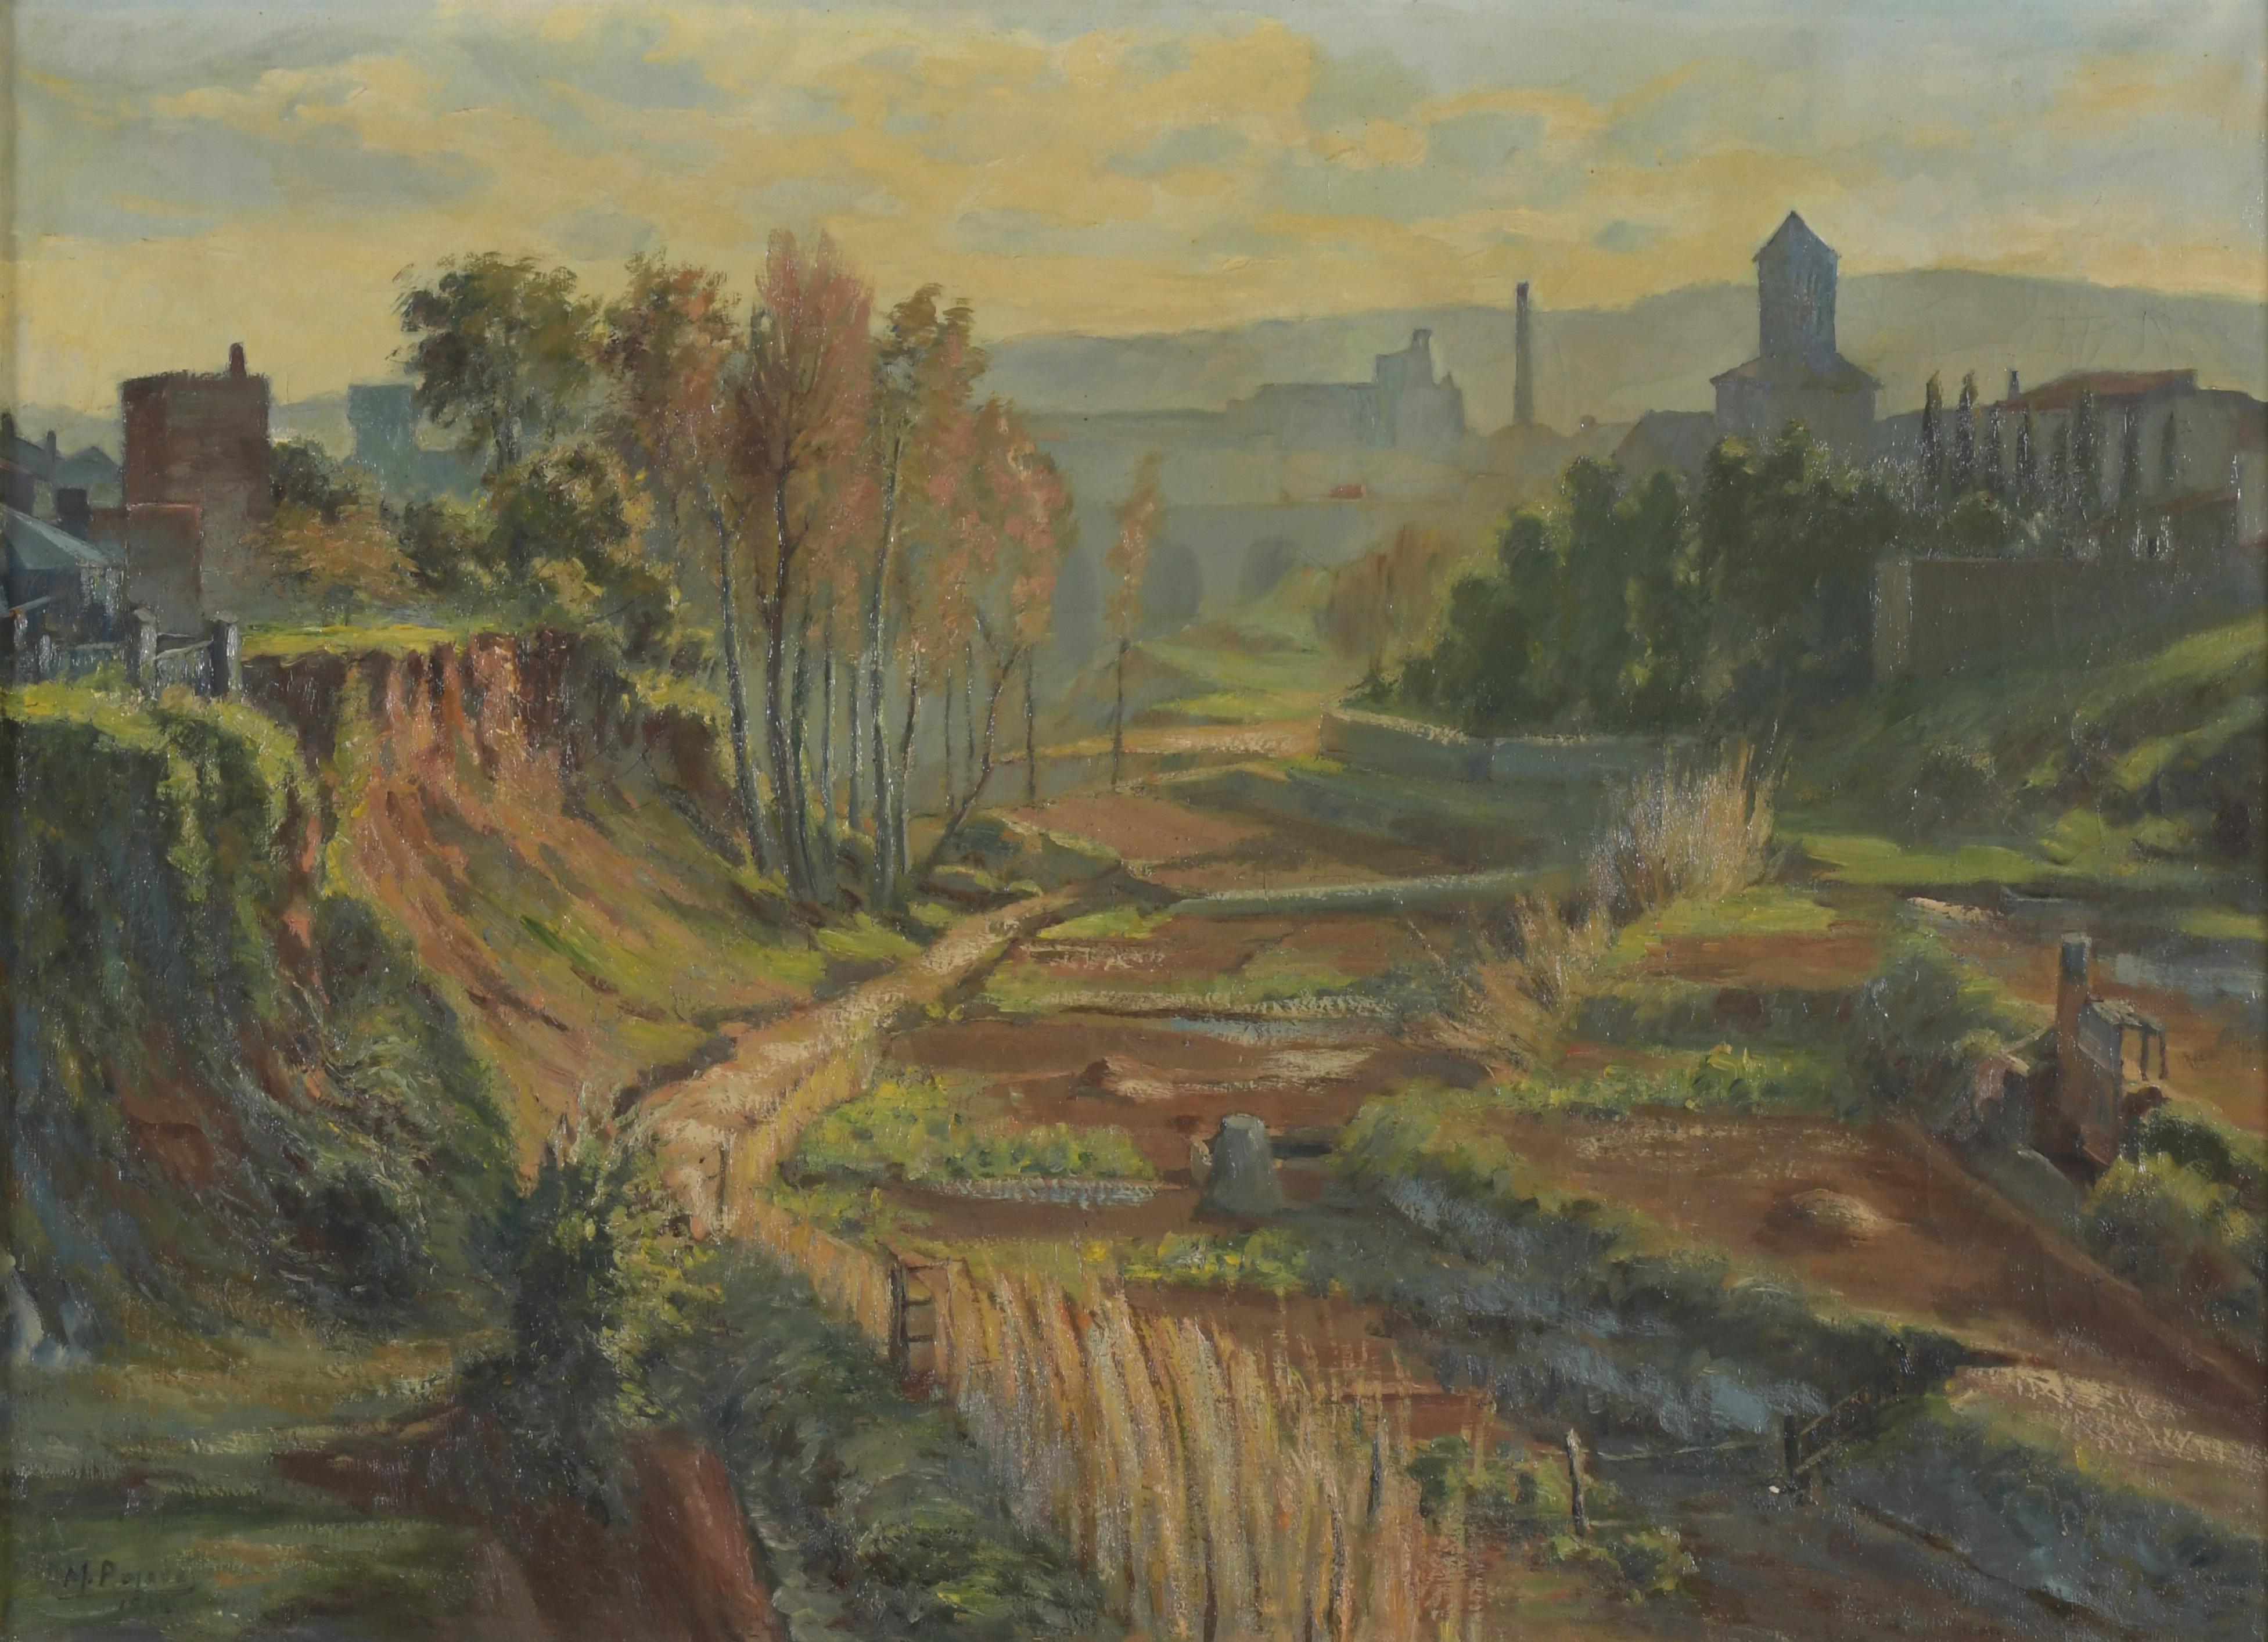 MIQUEL PUJADAS BADIA (1892-1974).  "LANDSCAPE", 1942.